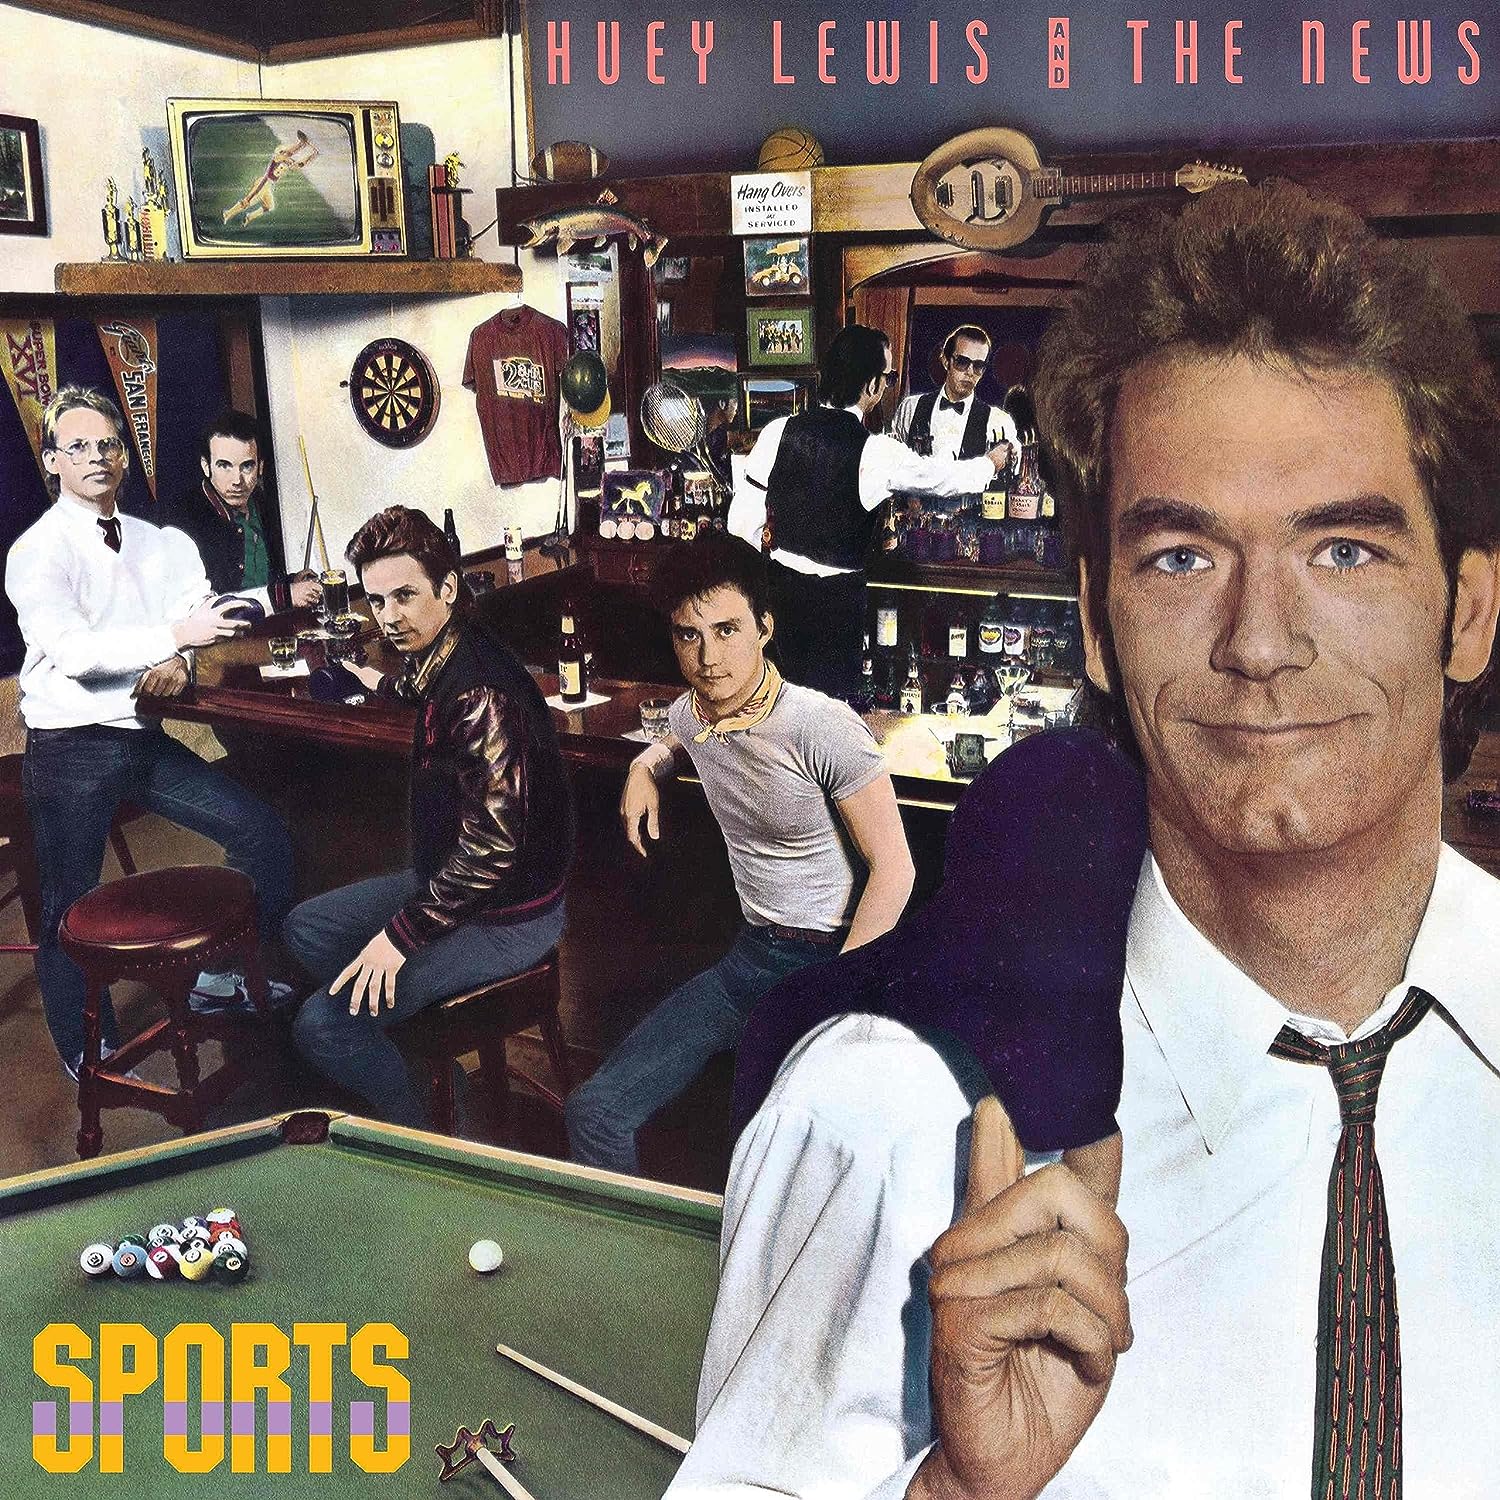 HUEY LEWIS & THE NEWS - Sports (40th Anniversary Reissue) - LP - Vinyl [SEP 15]